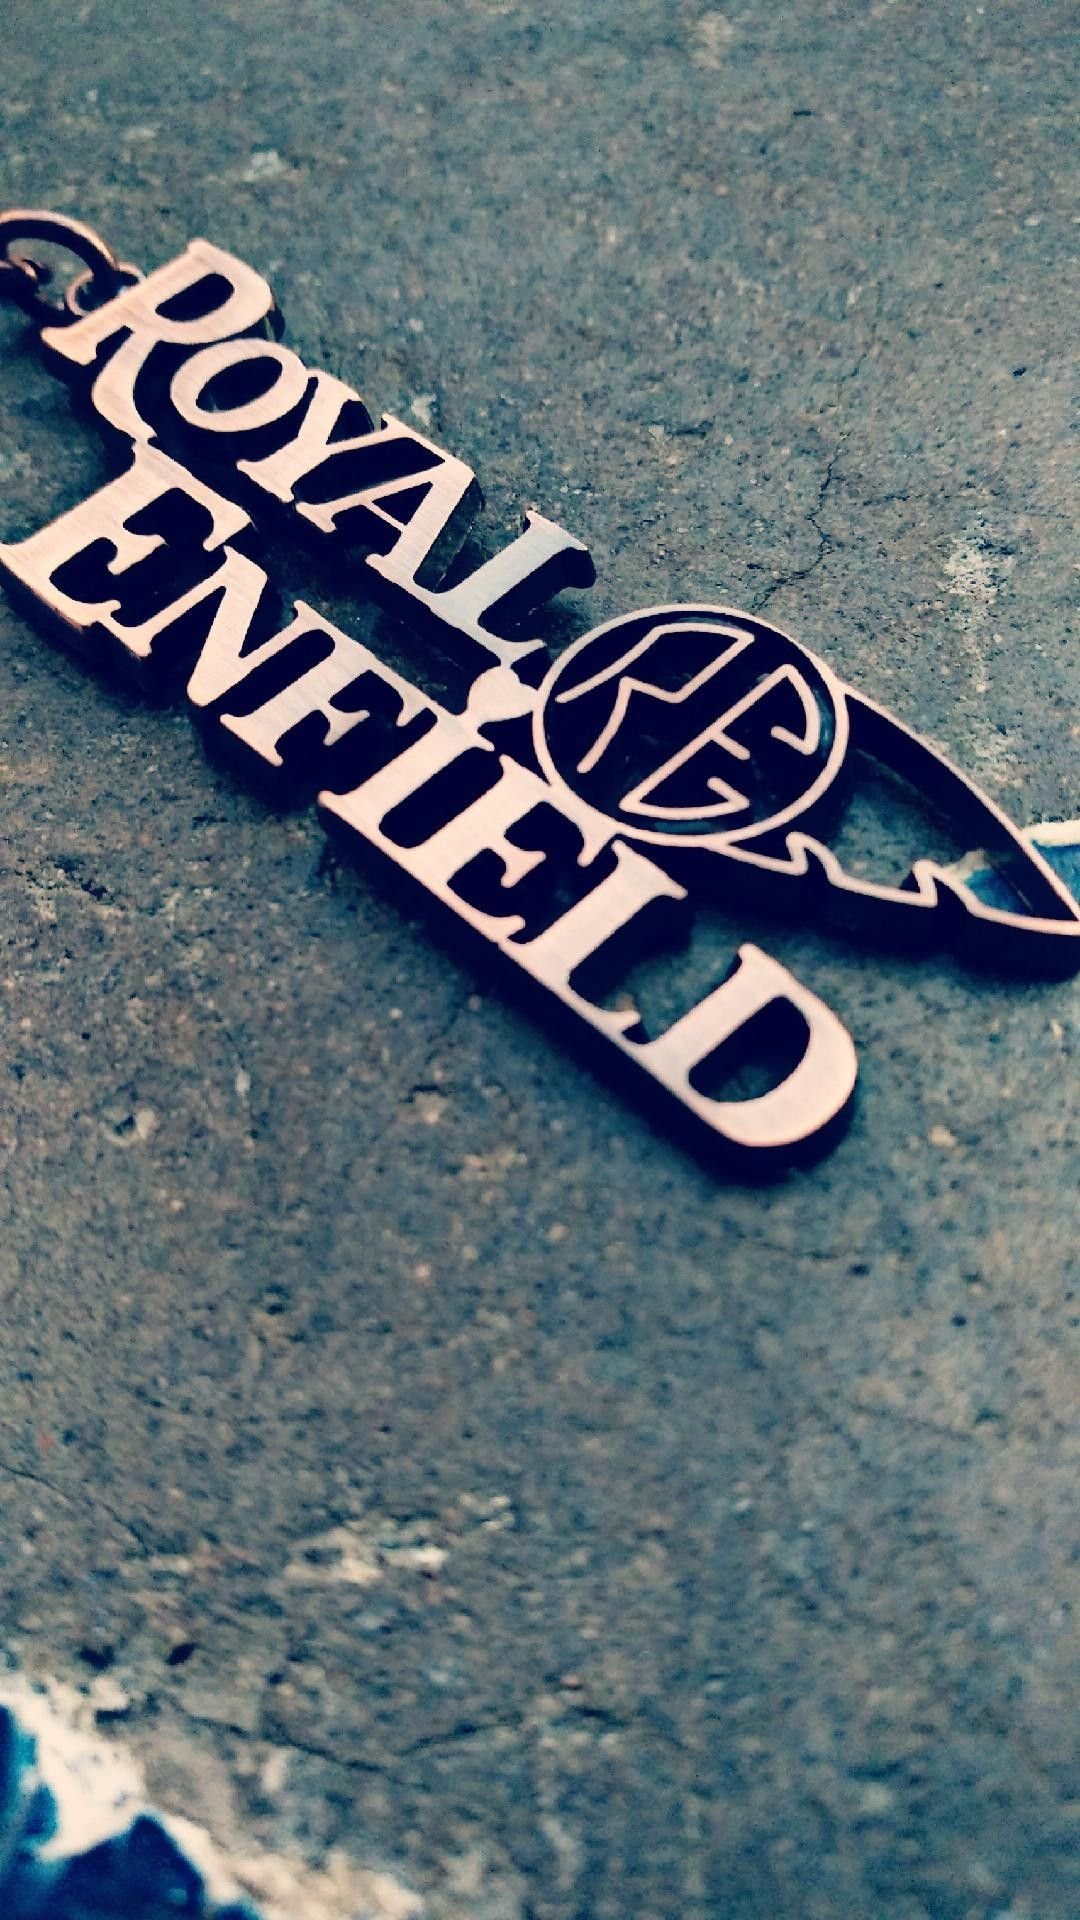 Royal Enfield keychain